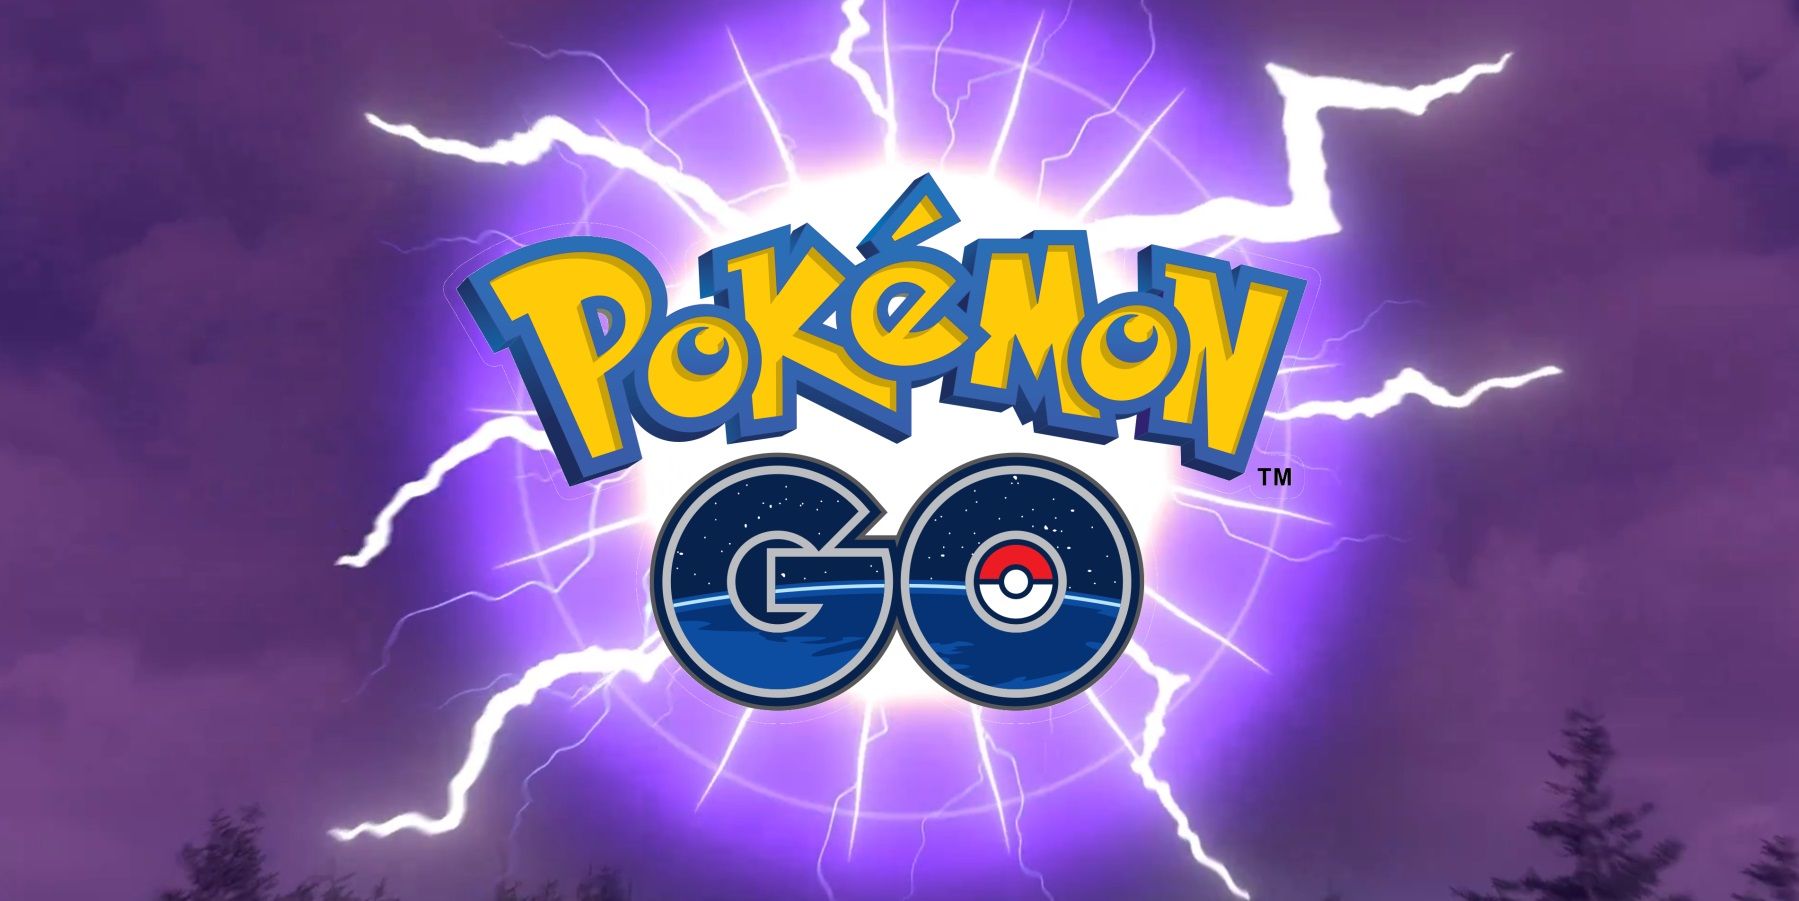 Pokémon GO re-designed logo by Emanuele Abrate on Dribbble